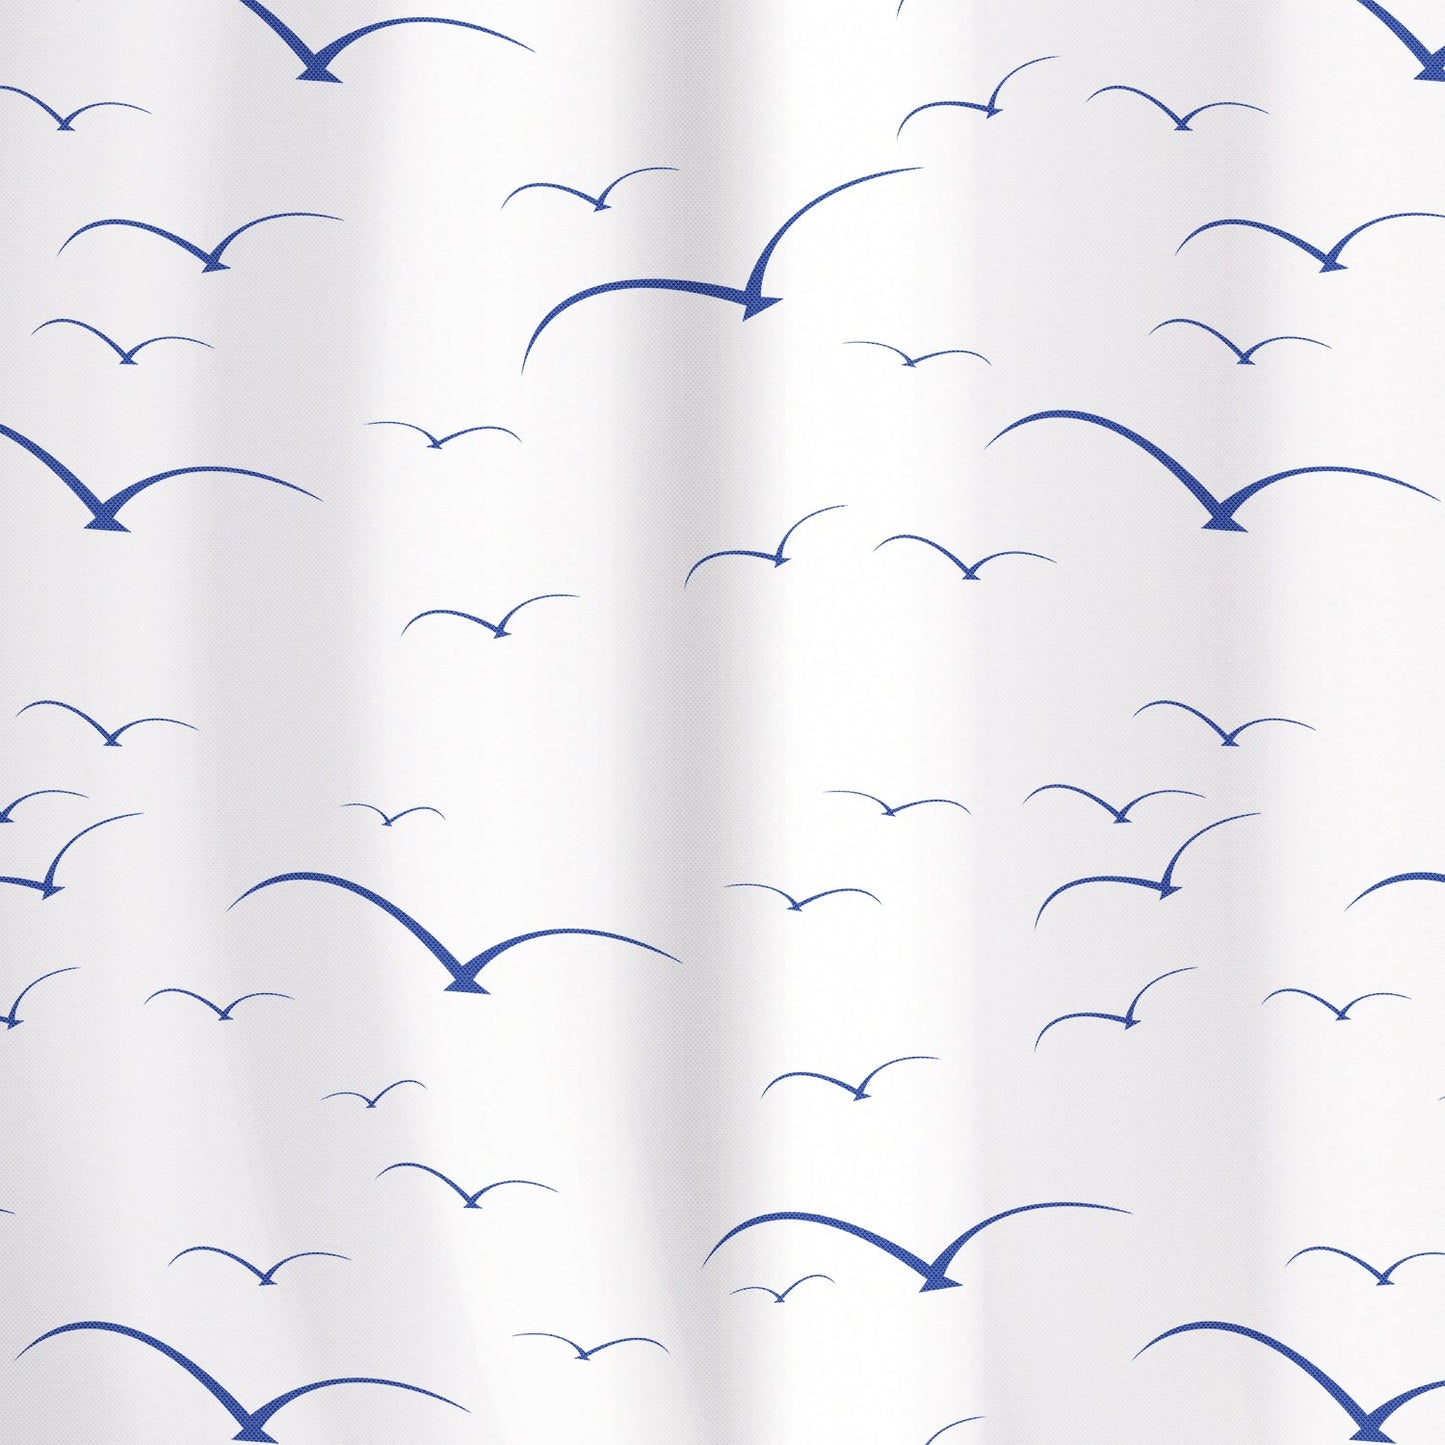 Tatkraft Seagulls Cortina de Ducha de Poliéster Impermeable, 180 x 180 cm, con 12 Anillos